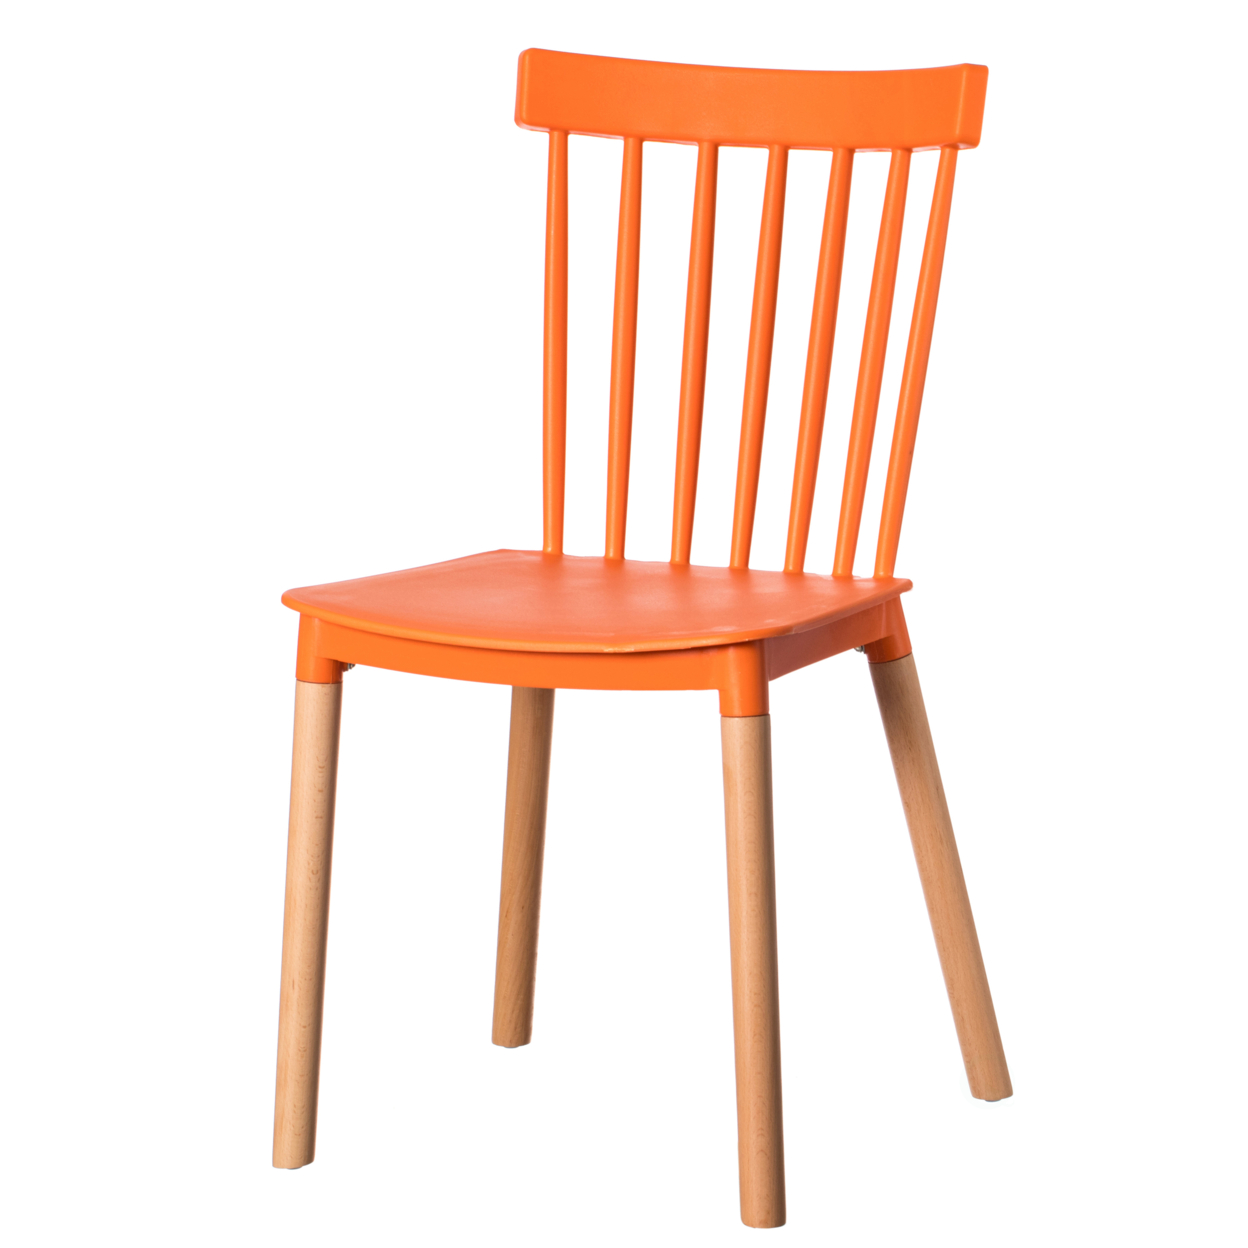 Modern Plastic Dining Chair Windsor Design With Beech Wood Legs - Single Orange